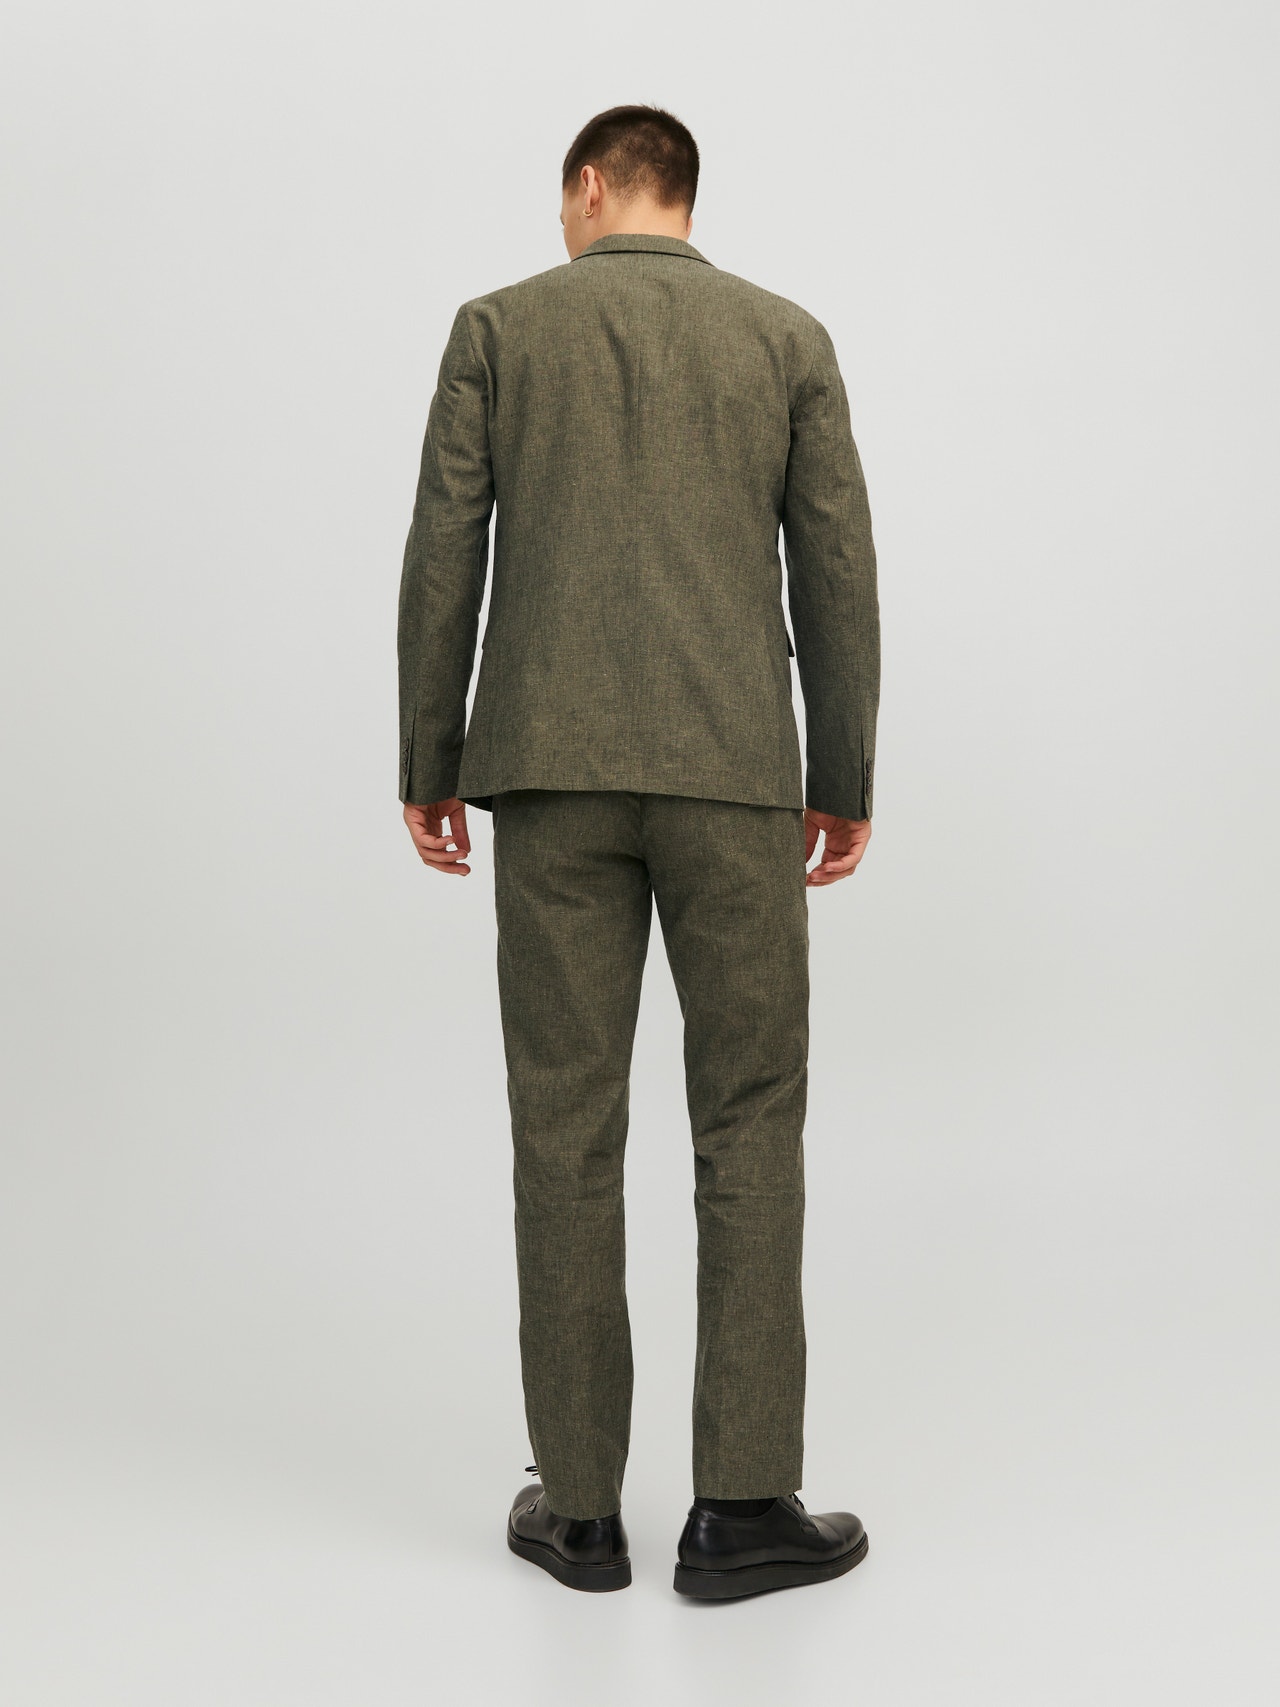 Jack & Jones JPRRIVIERA Slim Fit Tailored Trousers -Olive Night - 12228724